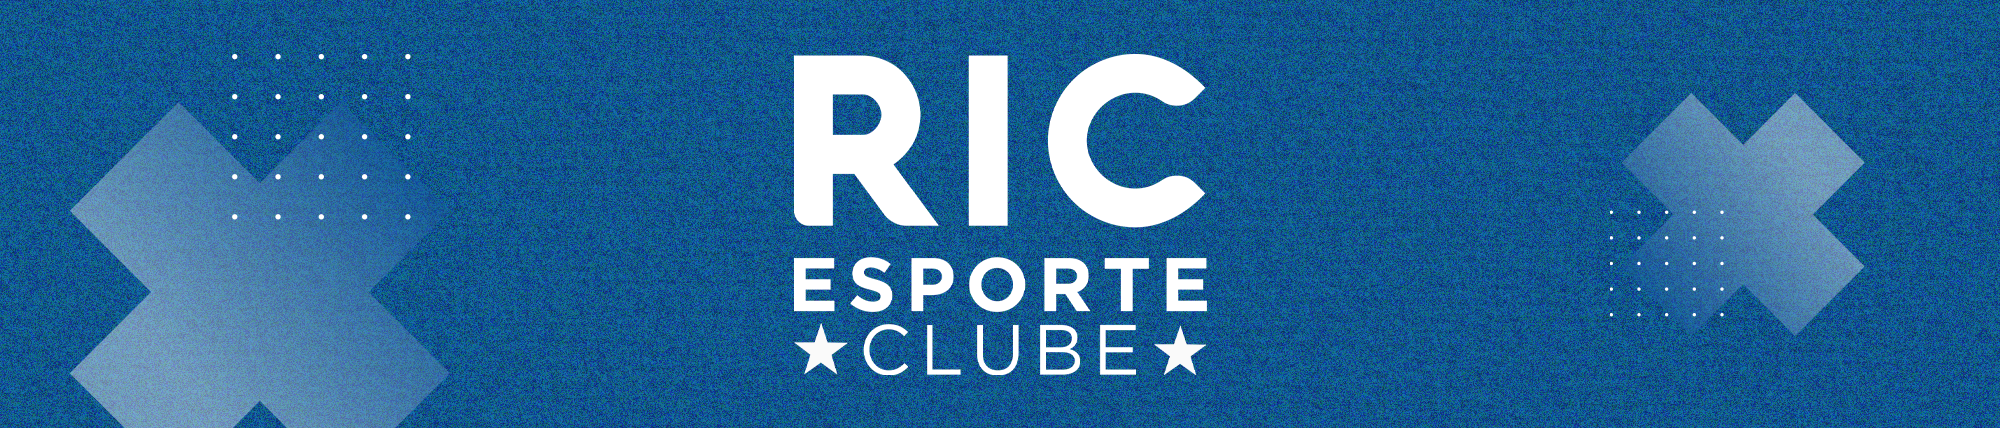 RIC Esporte Clube – Jornada Esportiva